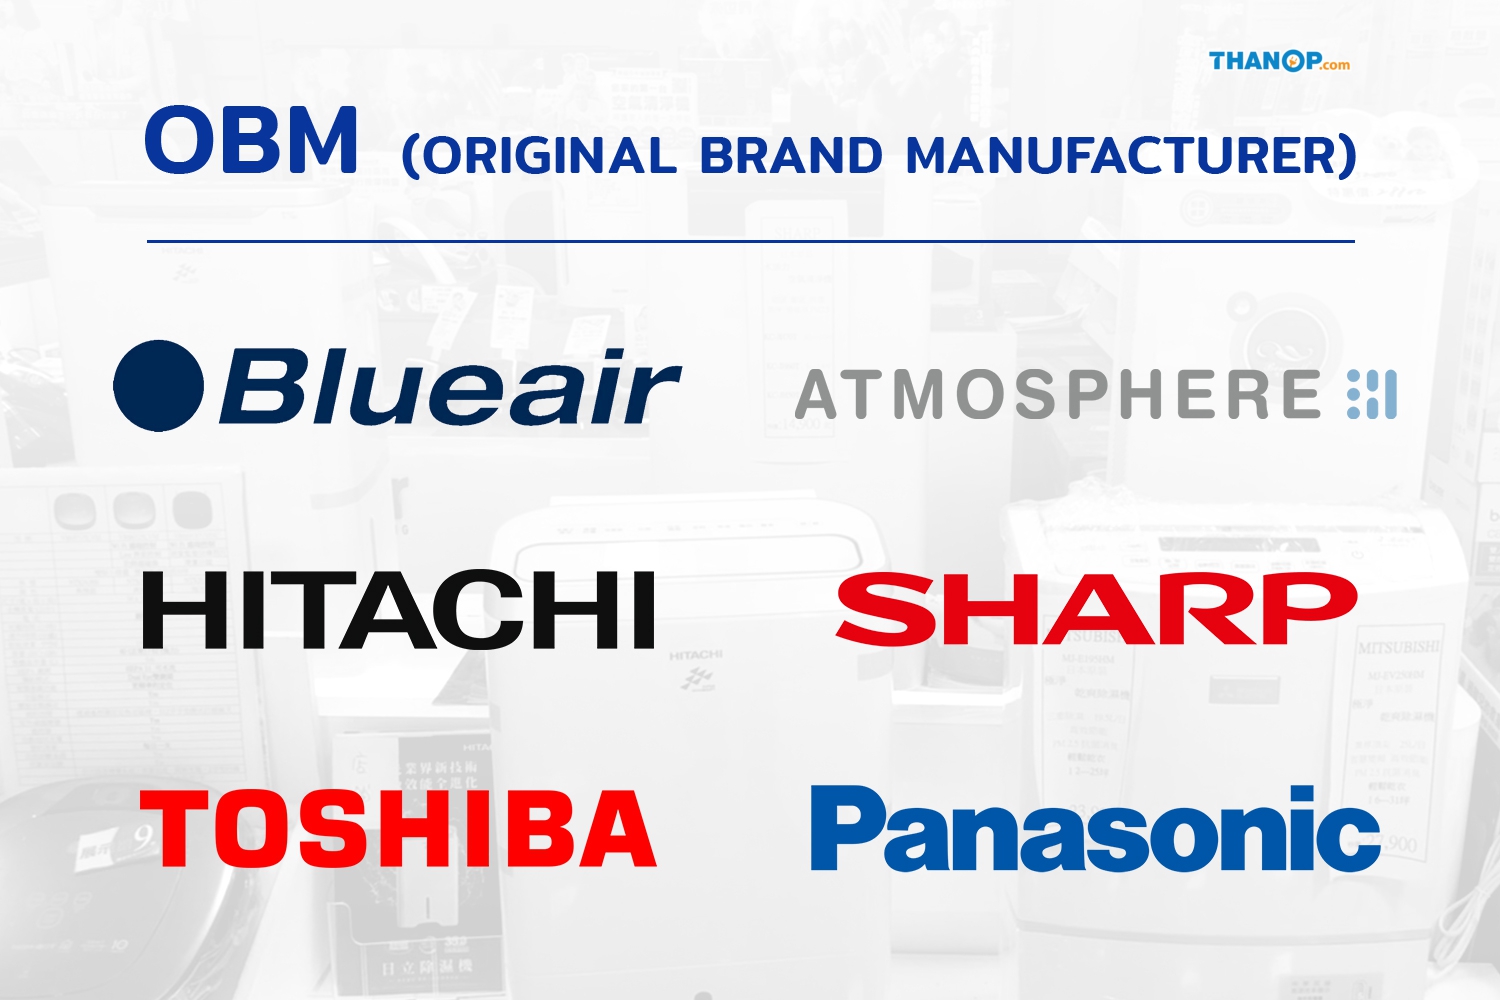 air-purifier-brand-obm-original-brand-manufacturer